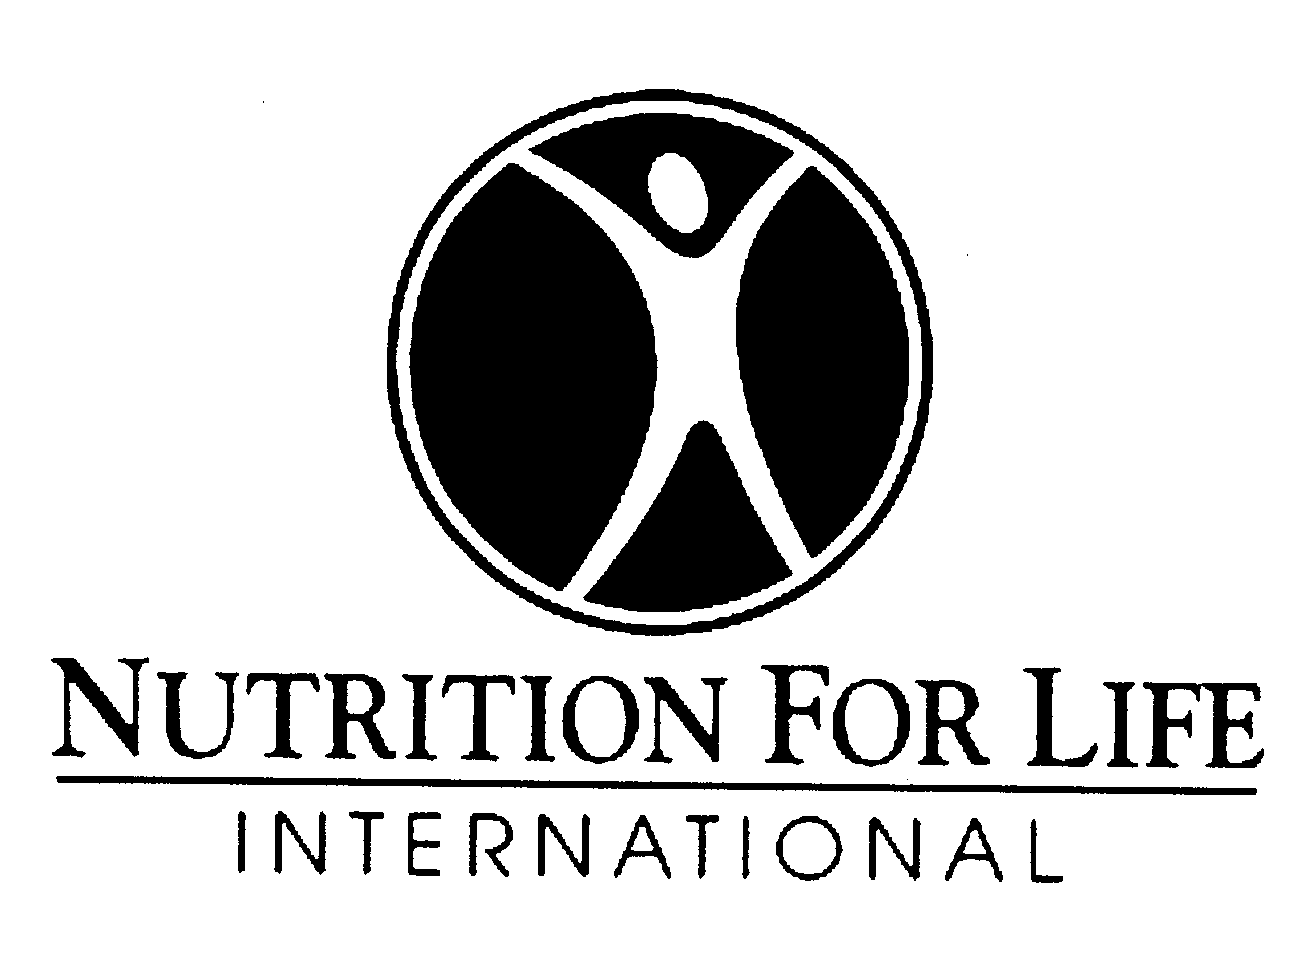  NUTRITION FOR LIFE INTERNATIONAL